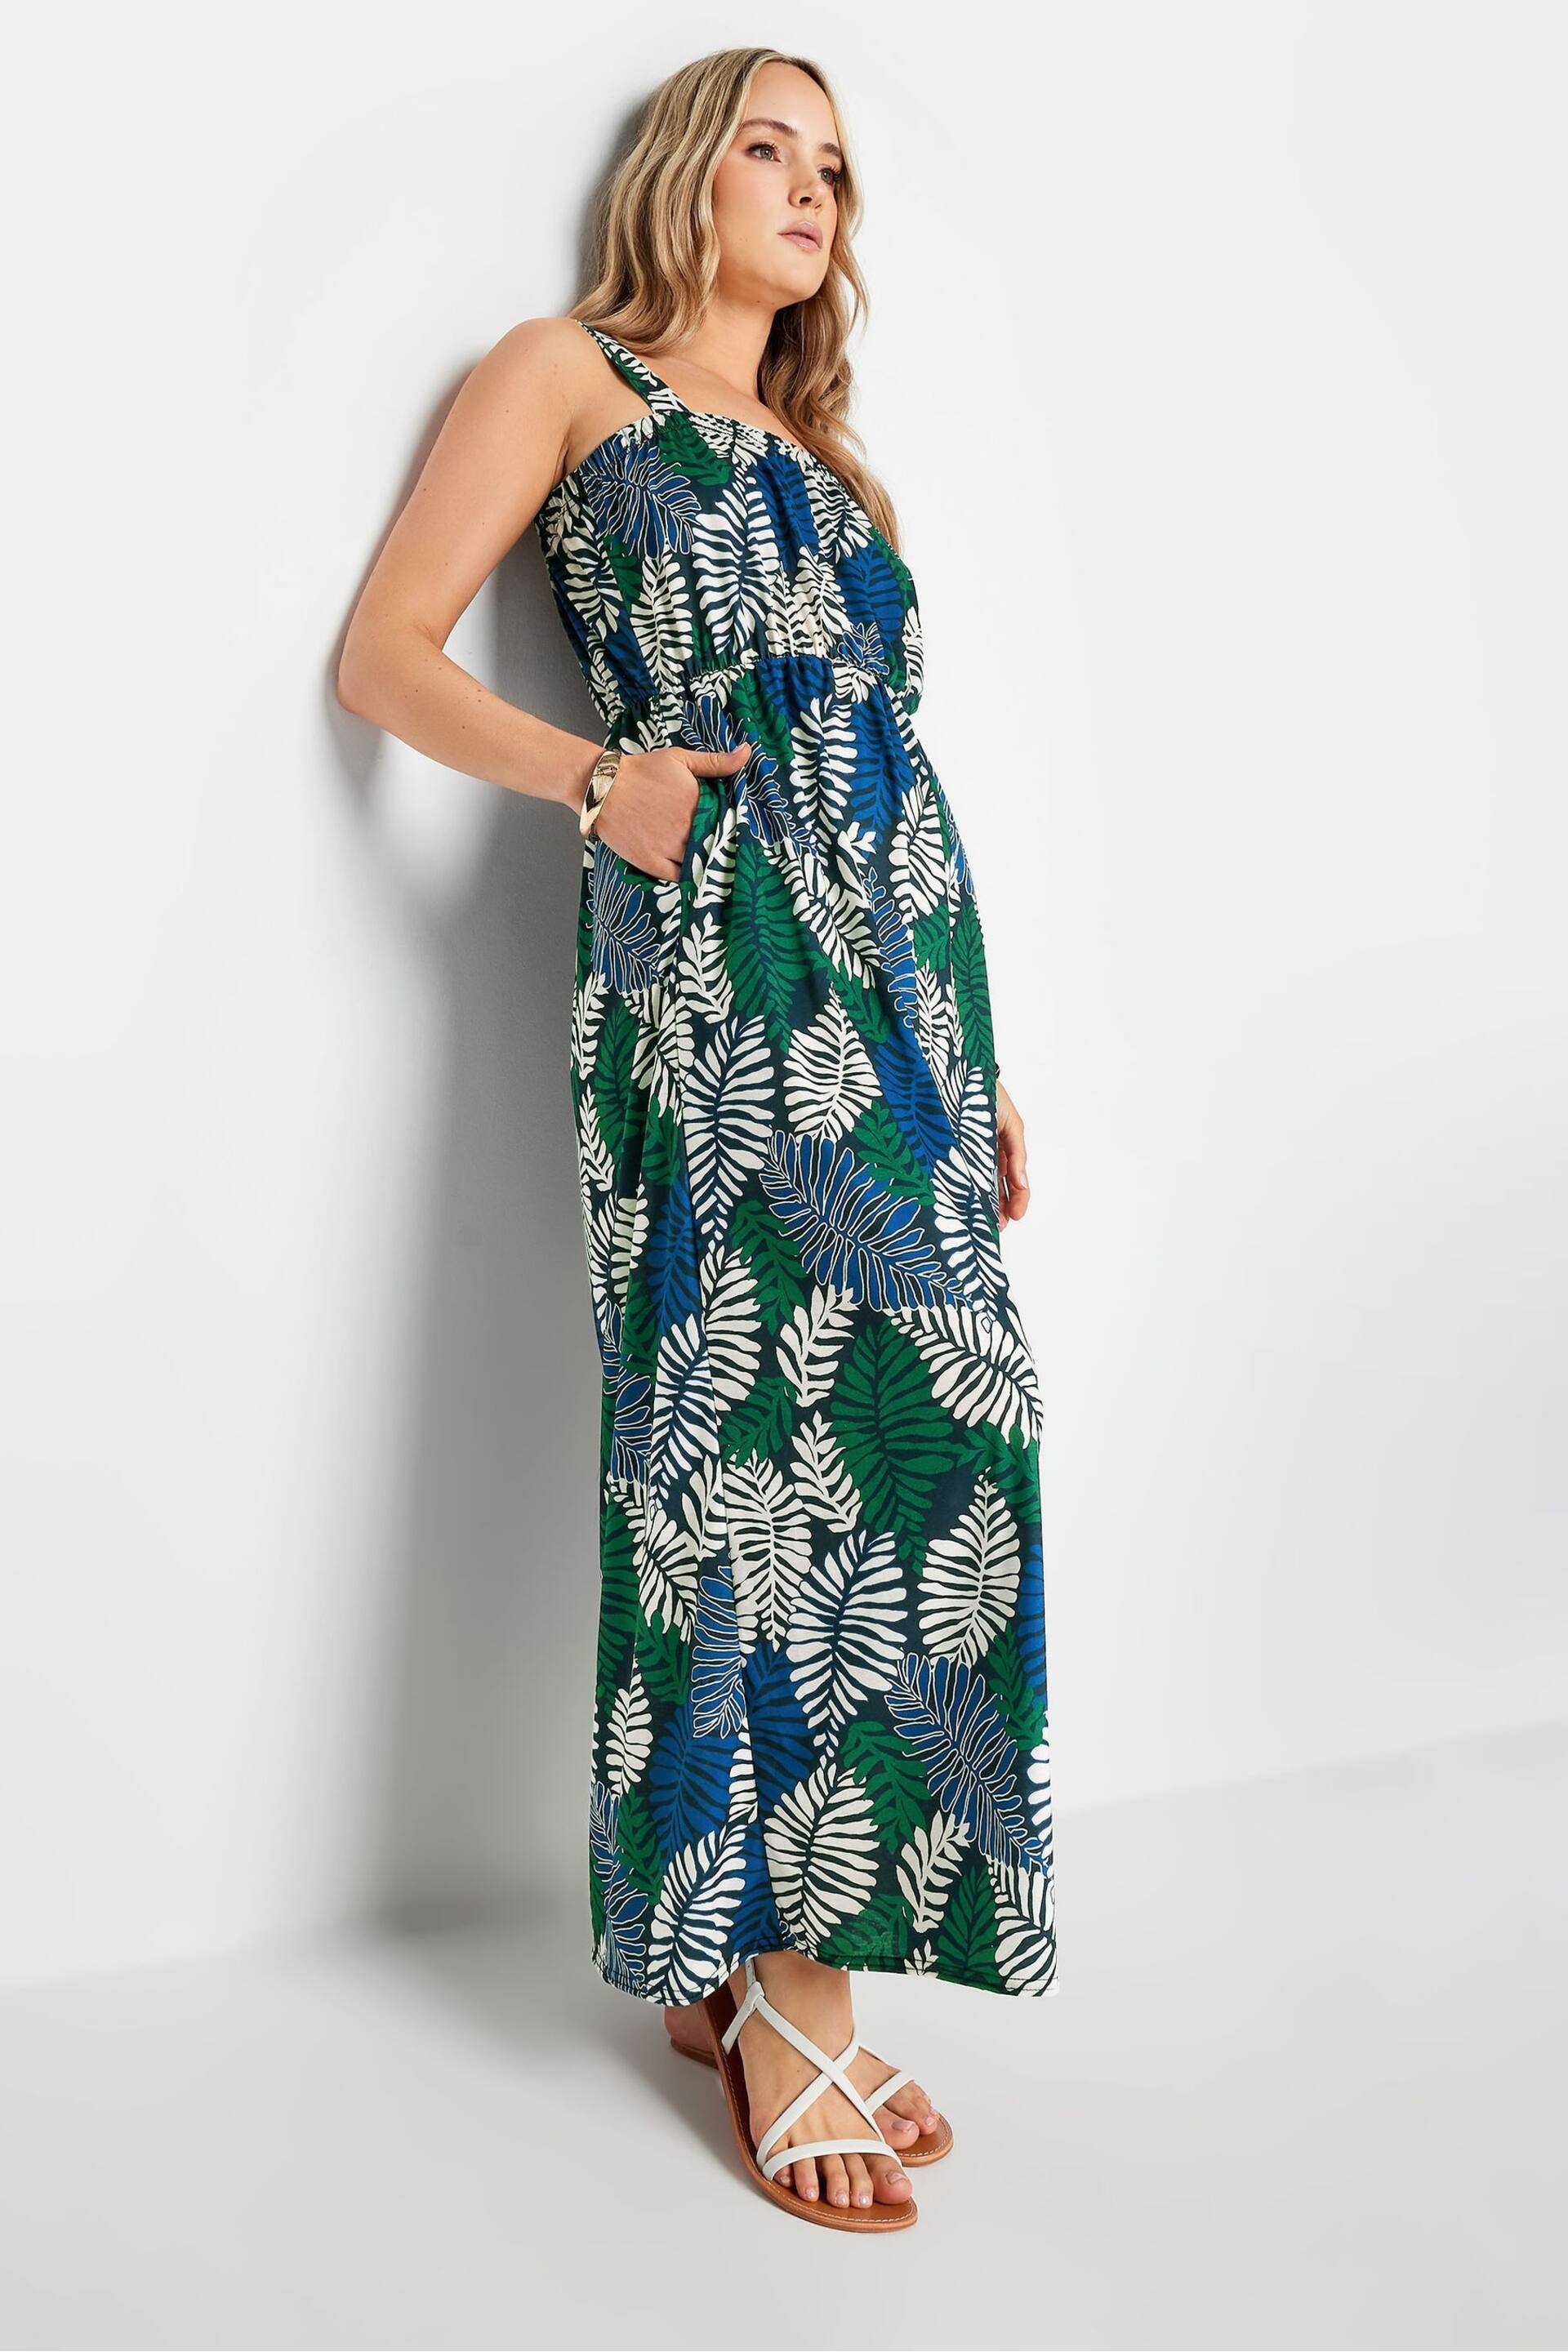 Long Tall Sally Blue LTS Tall Navy Tropical Print Midi Dress - Image 1 of 5